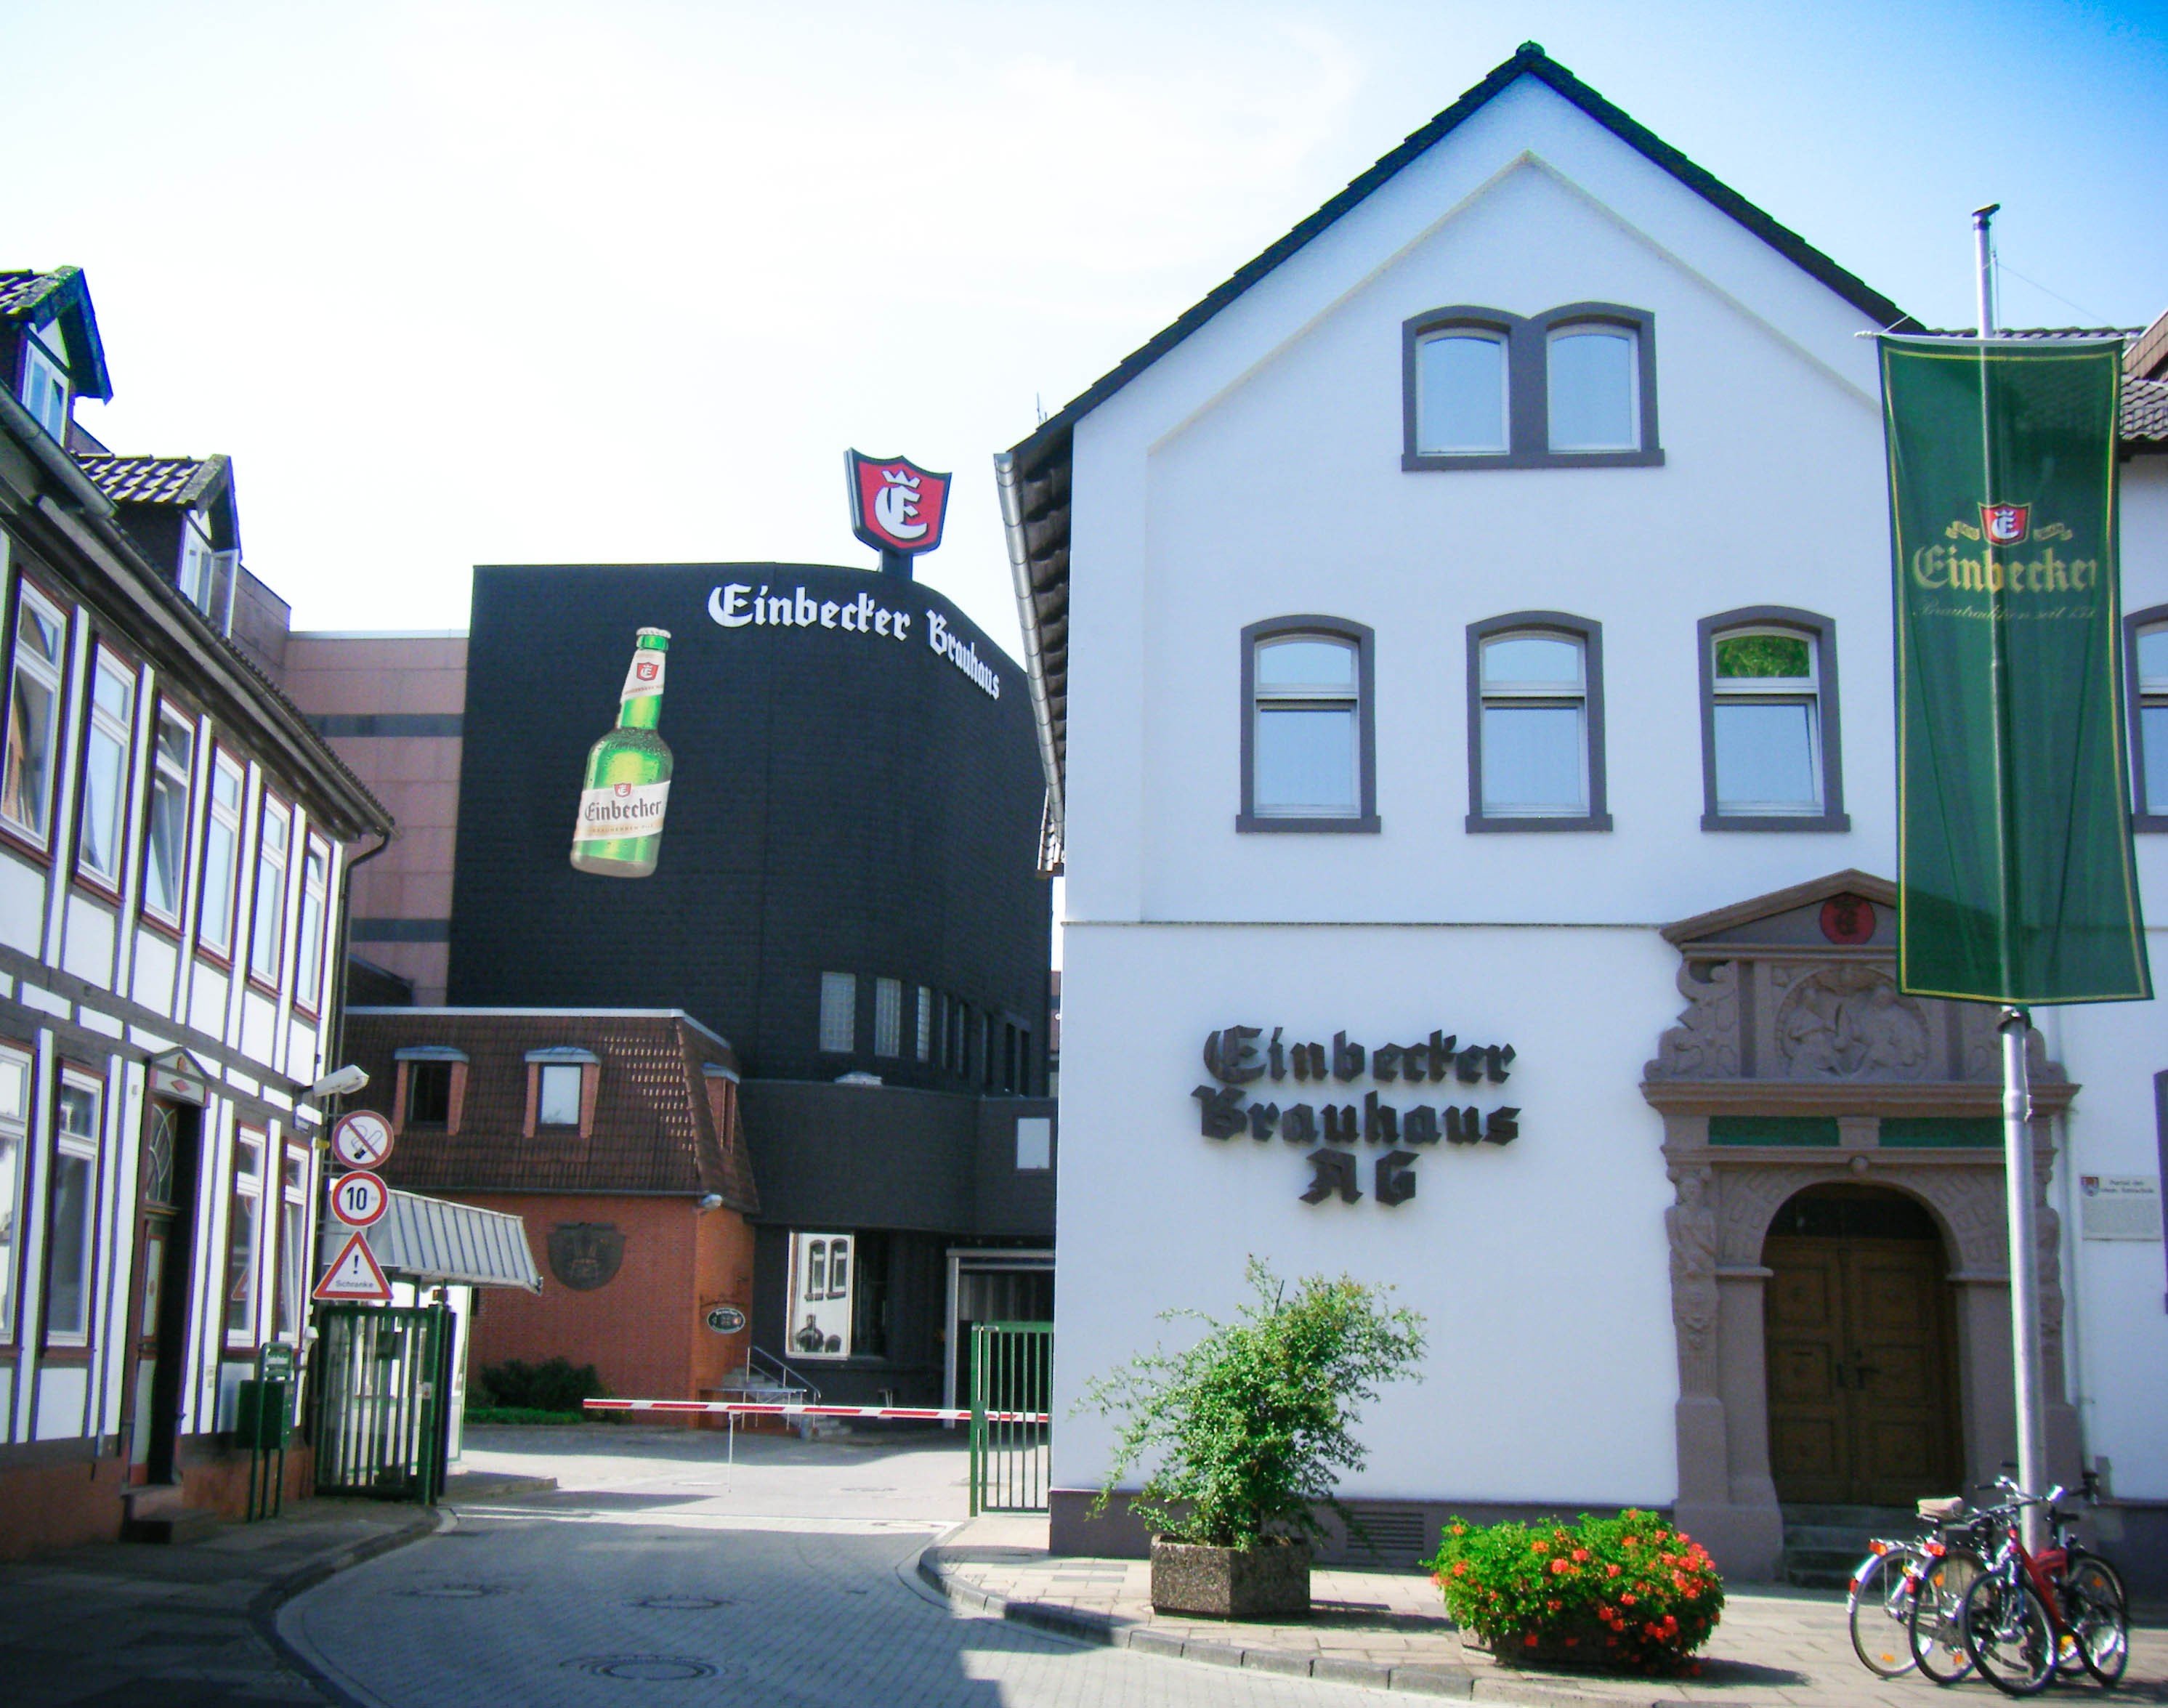 Einbecker Brauhaus brewery from Germany